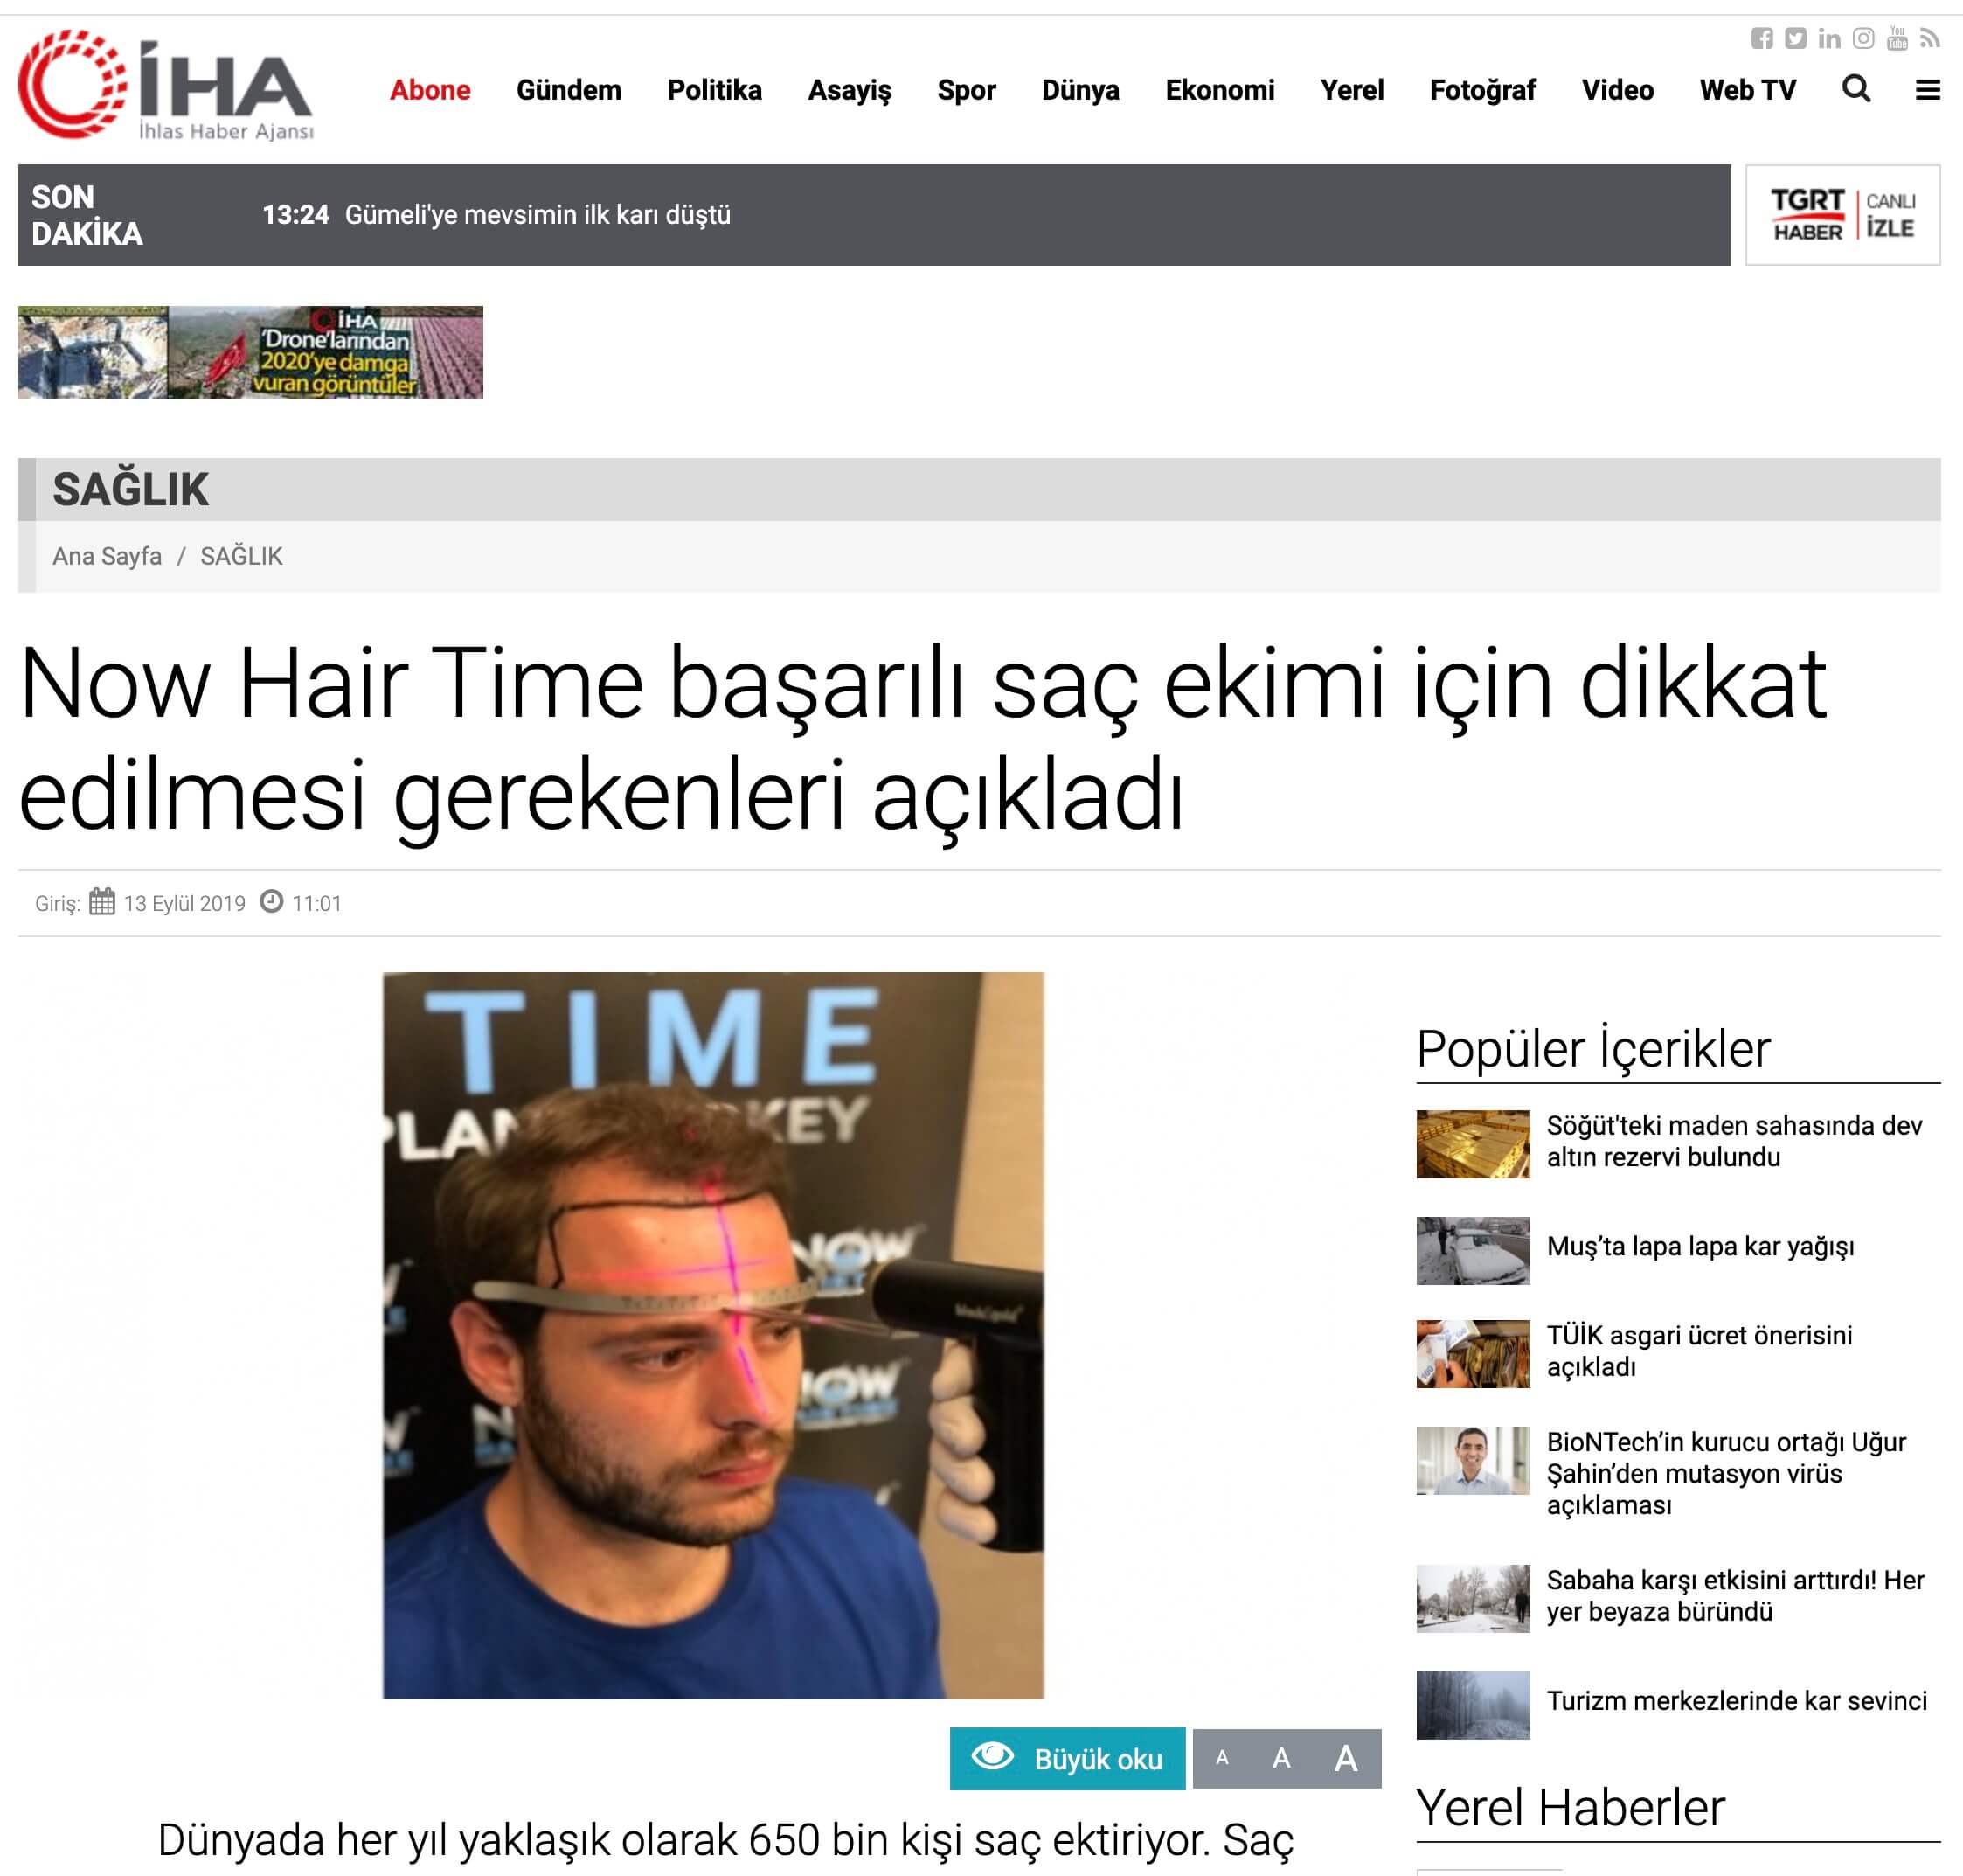 Now Hair Time Media